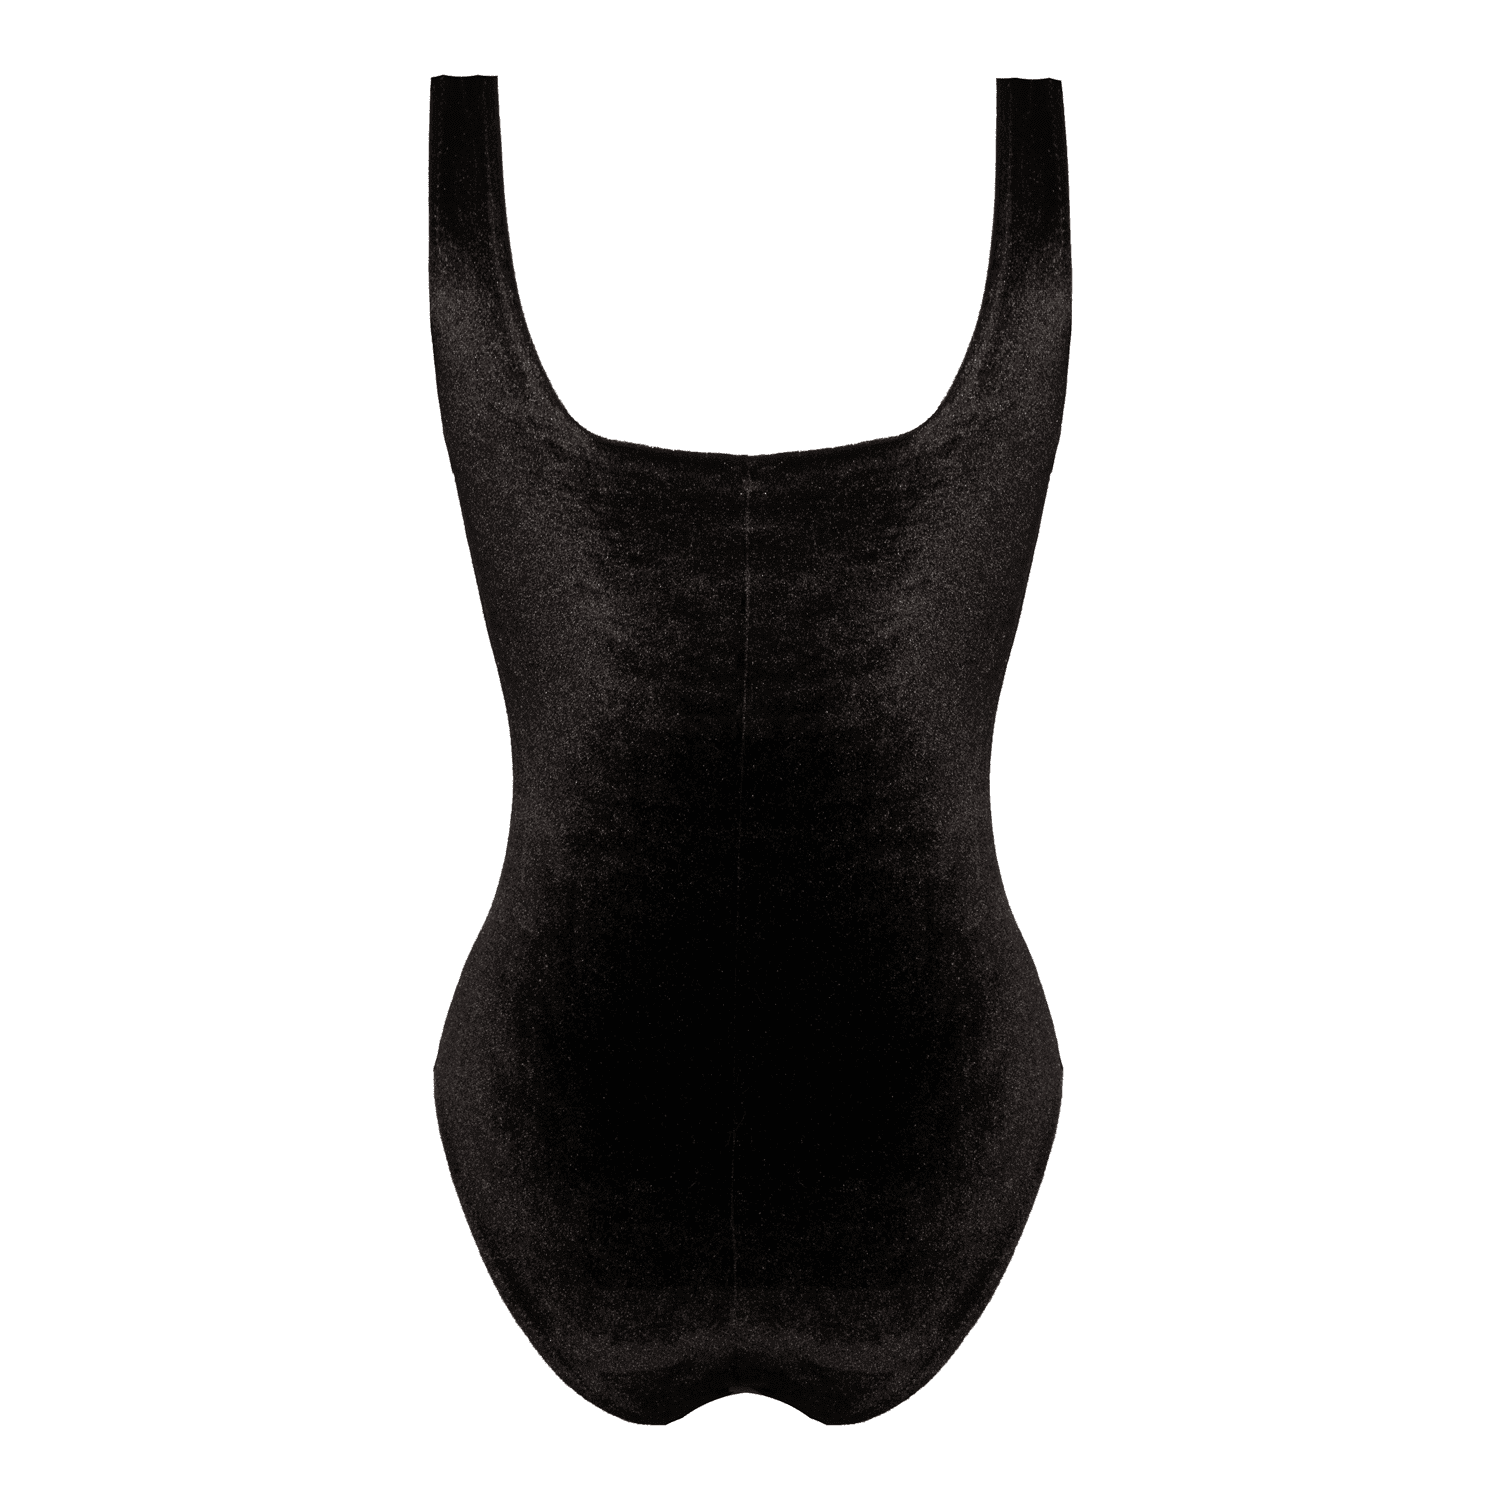 Bersèra black swimsuit - One Piece swimsuit by Keosme. Shop on yesUndress